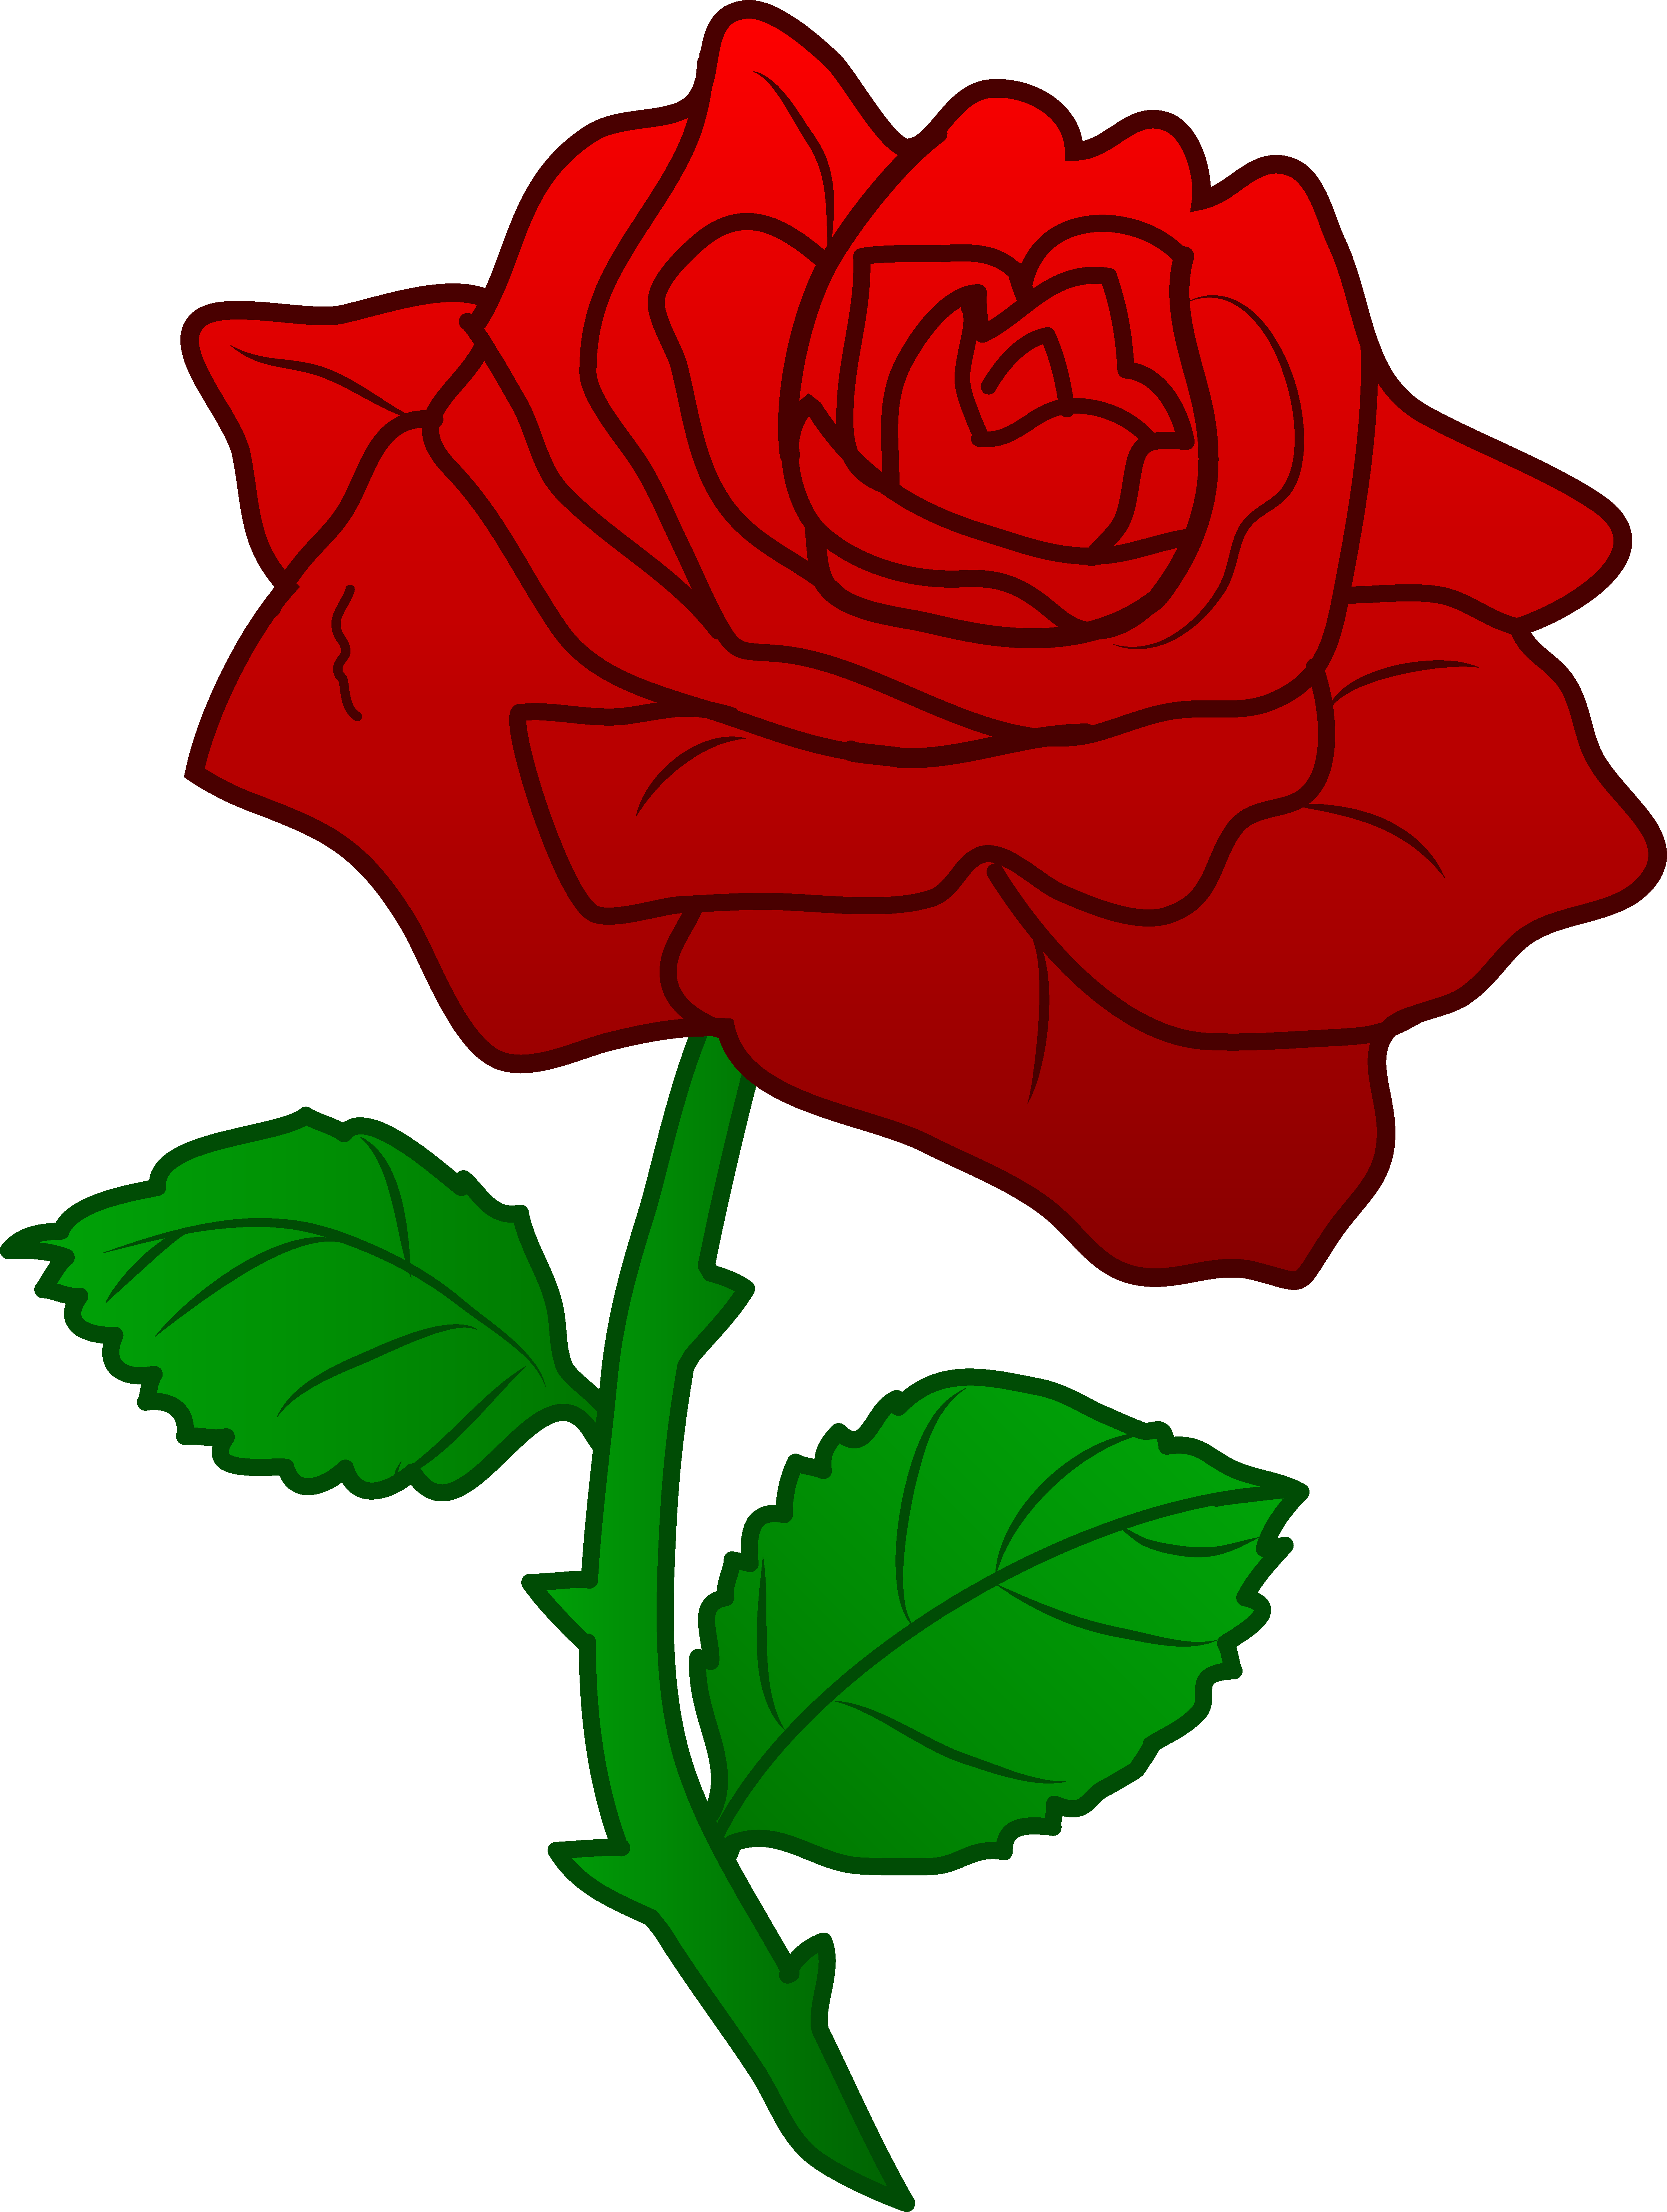 Roses PNG; Large Red Roses PN